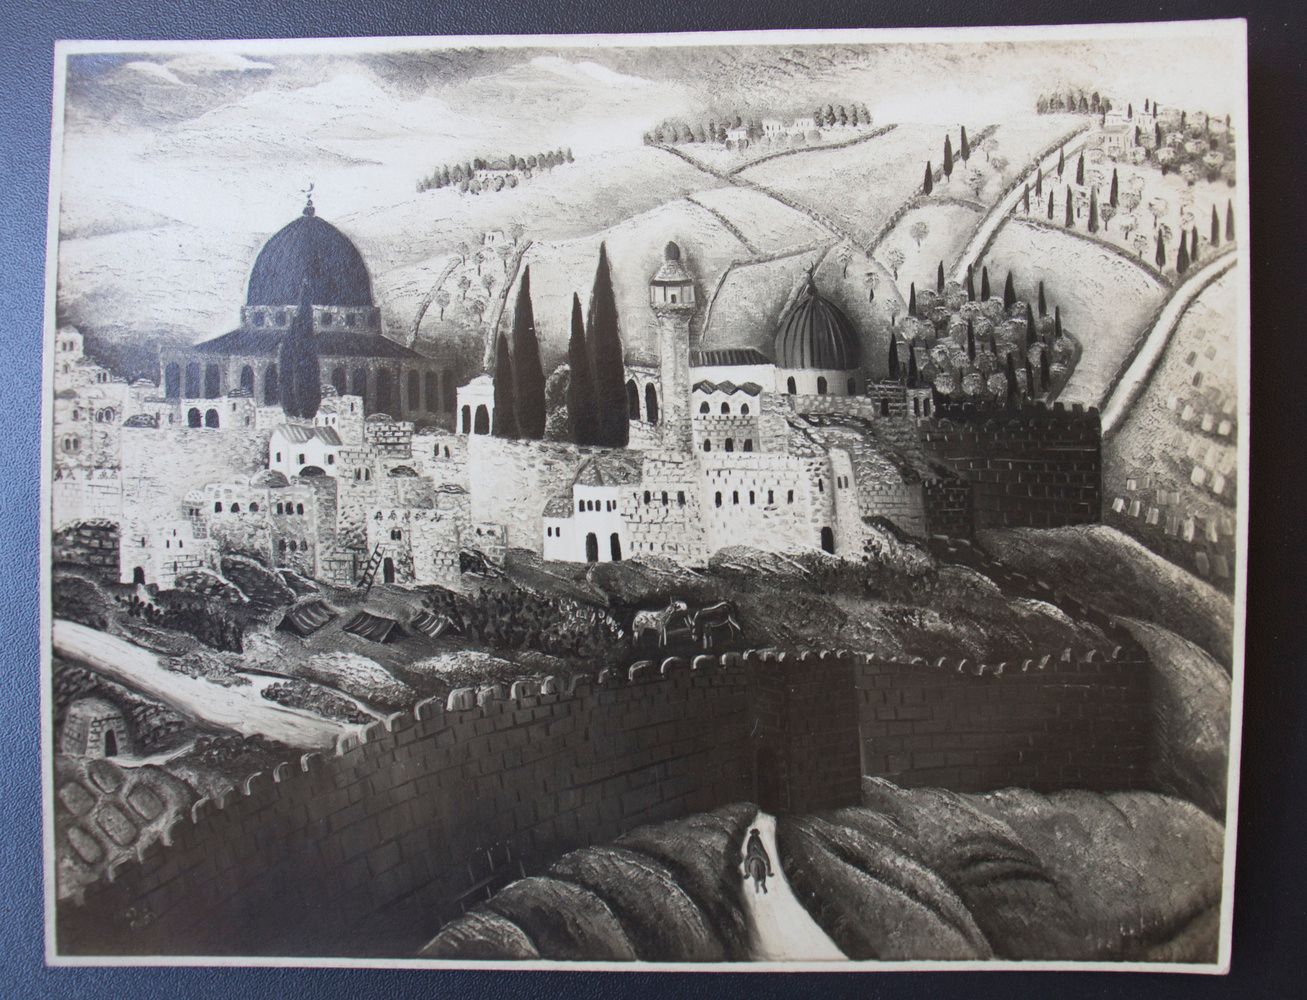 Reuven Rubin (1893-1974), Gemäldefoto 'Jerusalem II', 1928 Tecnica: fotografia,
&hellip;